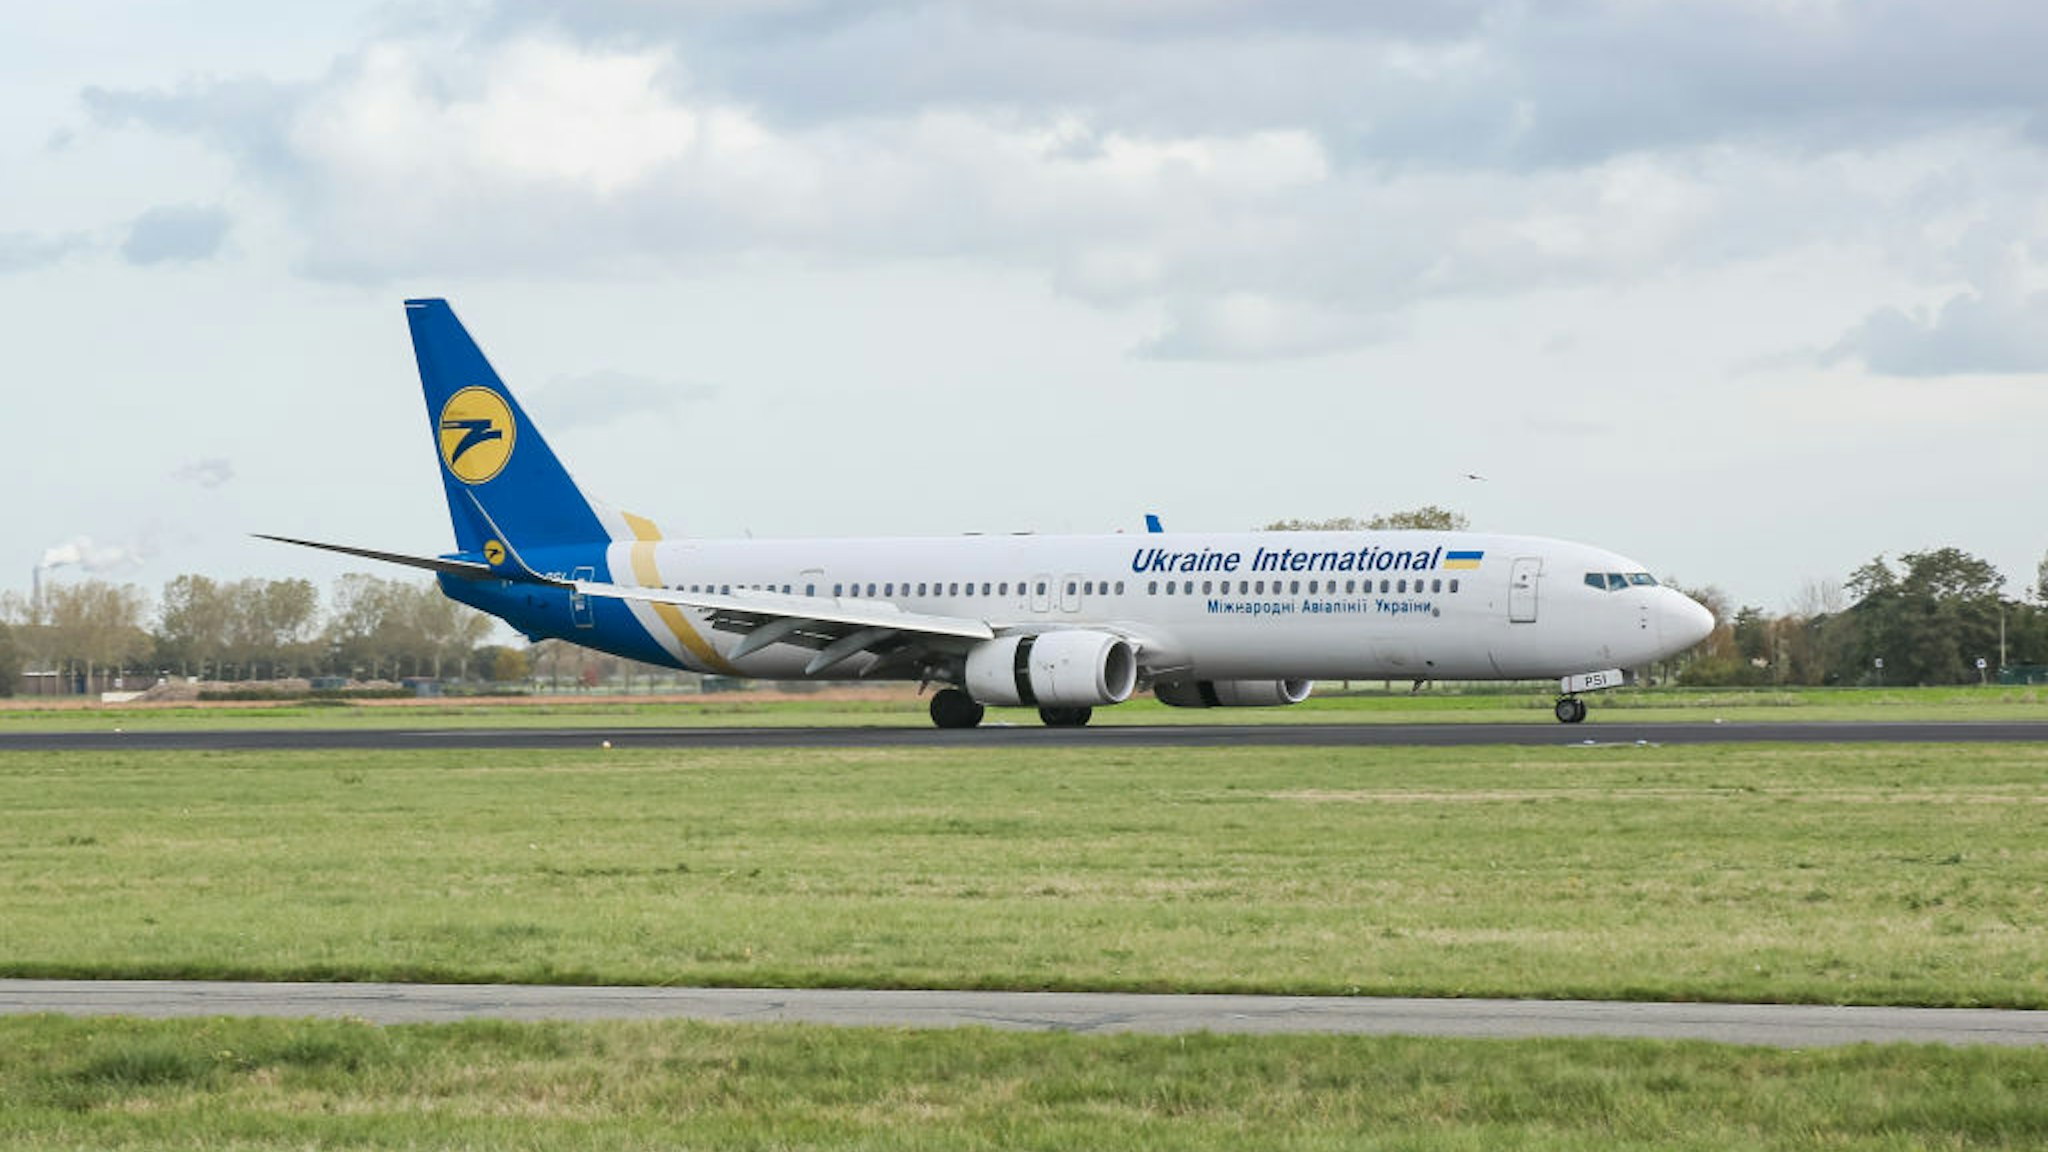 Ukraine International Airlines UIA Boeing 737 aircraft as seen landing at Amsterdam Schiphol AMS EHAM Airport.